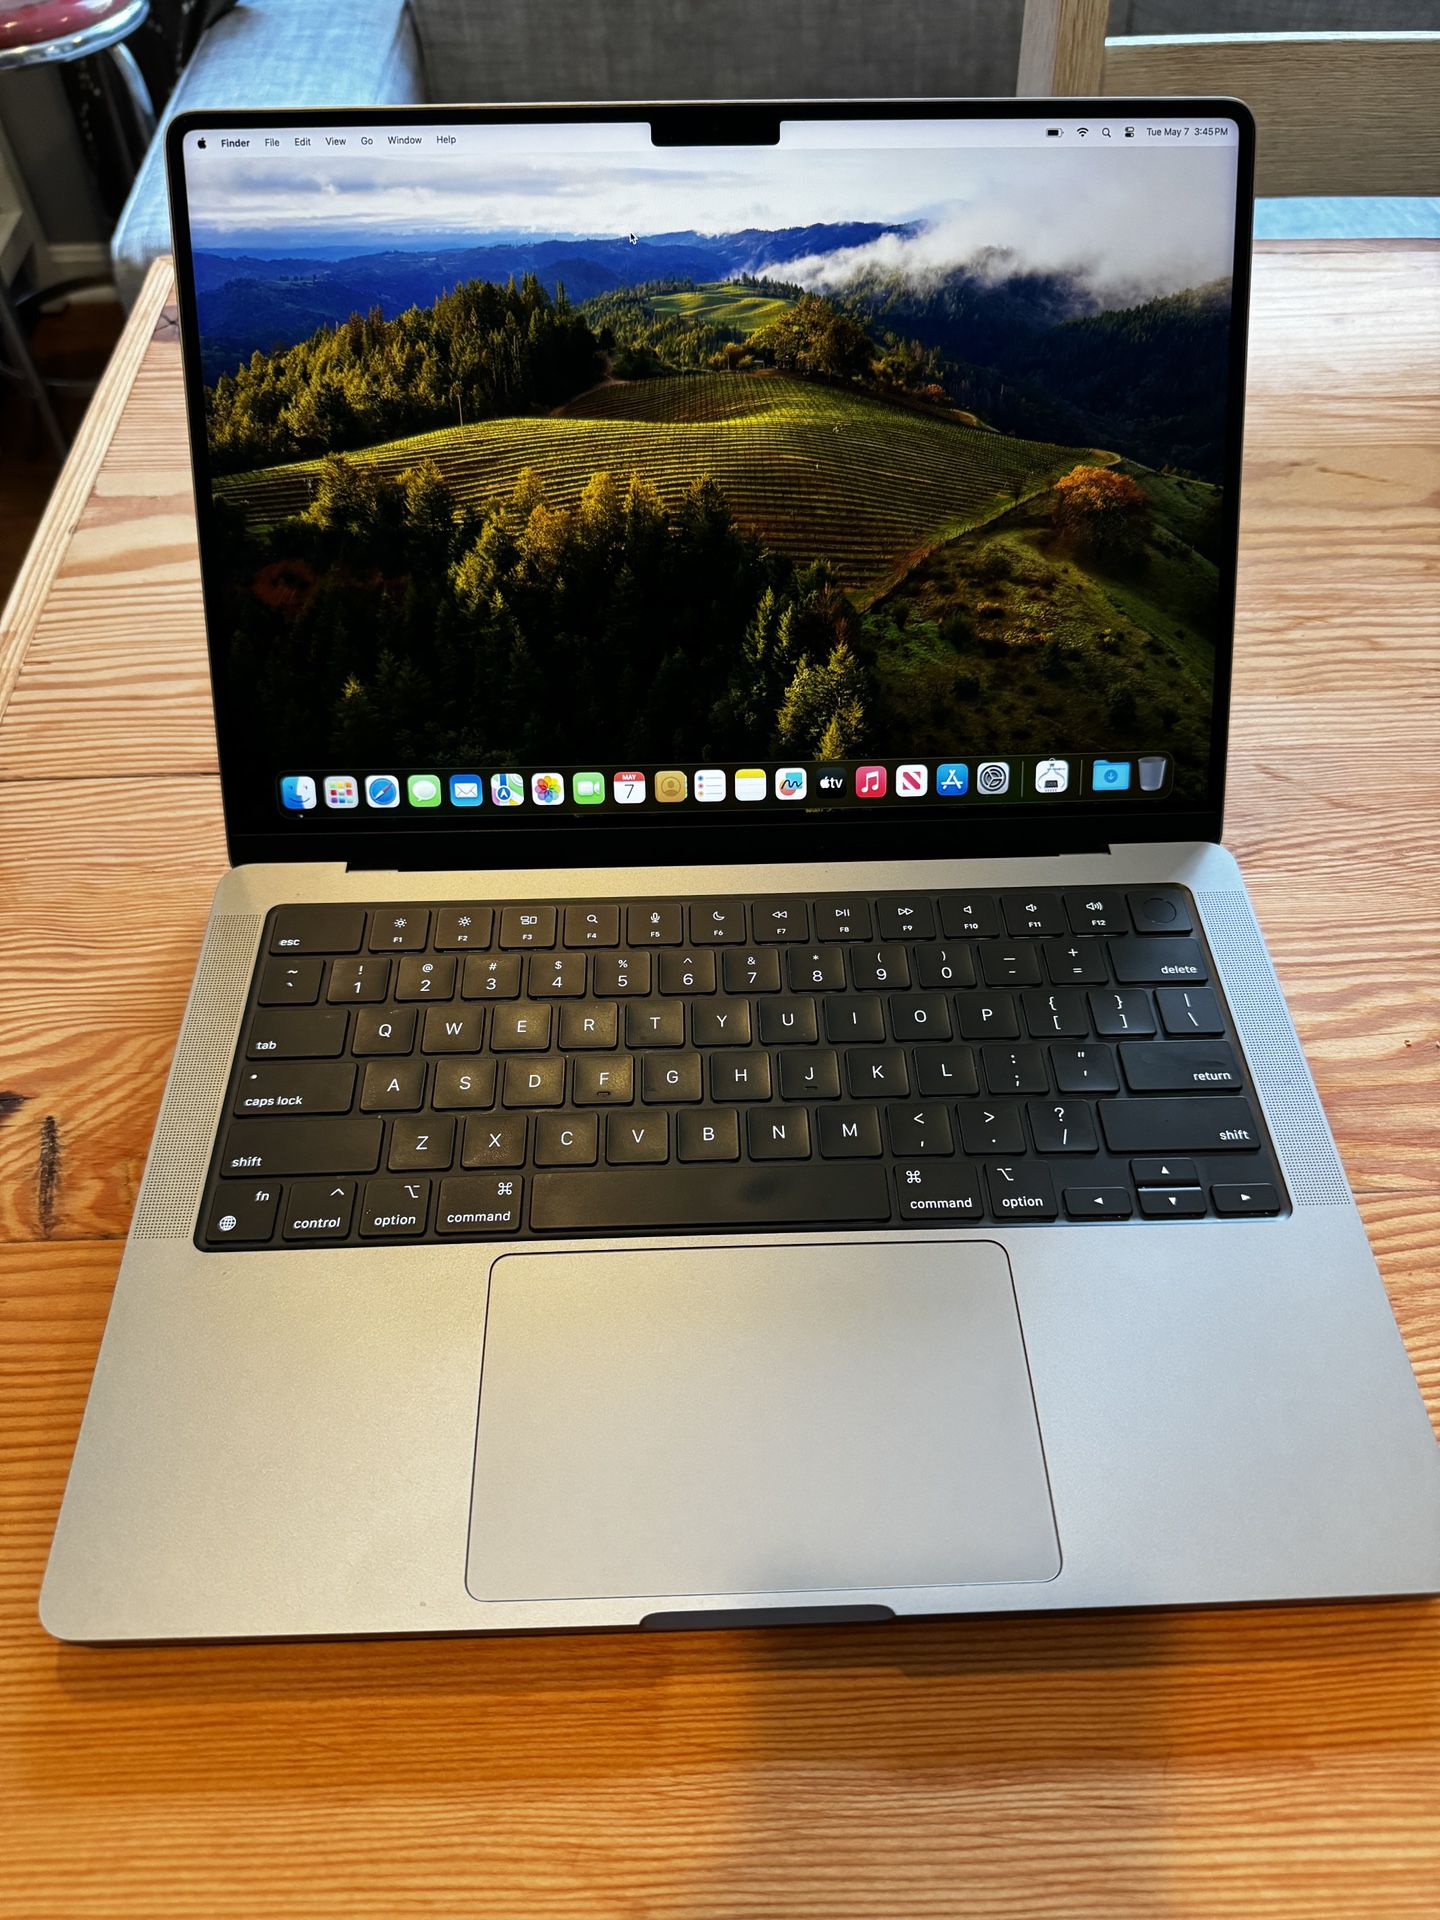 Mint Condition 14 Inch MacBook M1 Pro